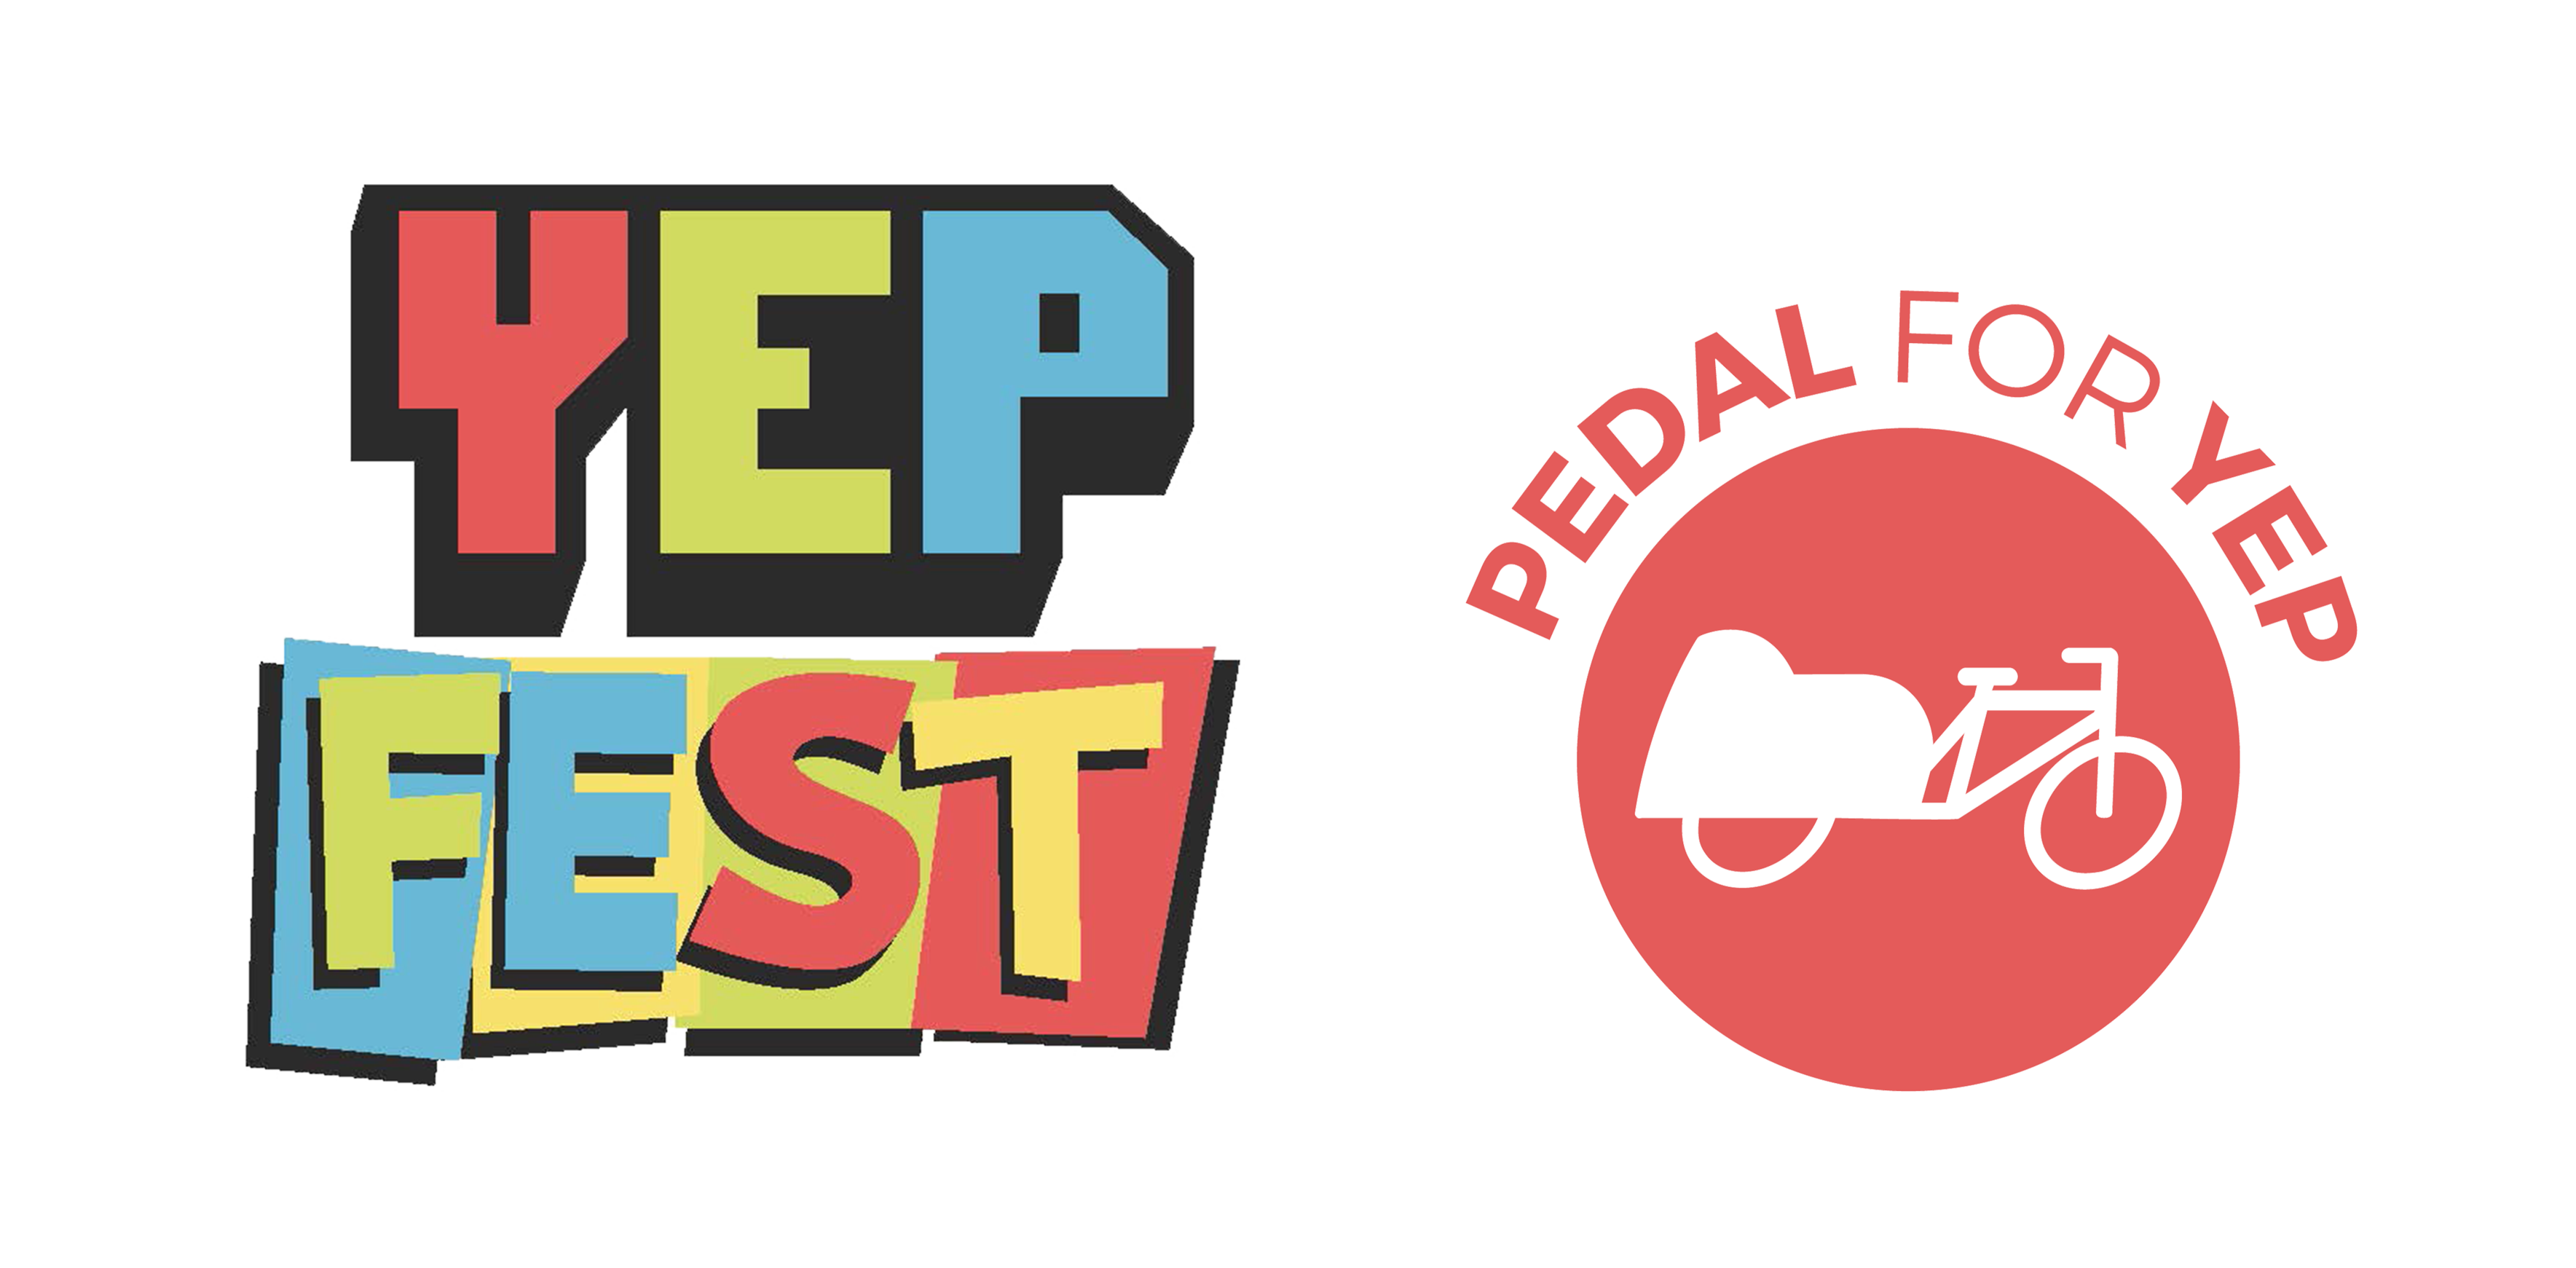 Yep fest featuring pedal. Fiesta clipart school festival